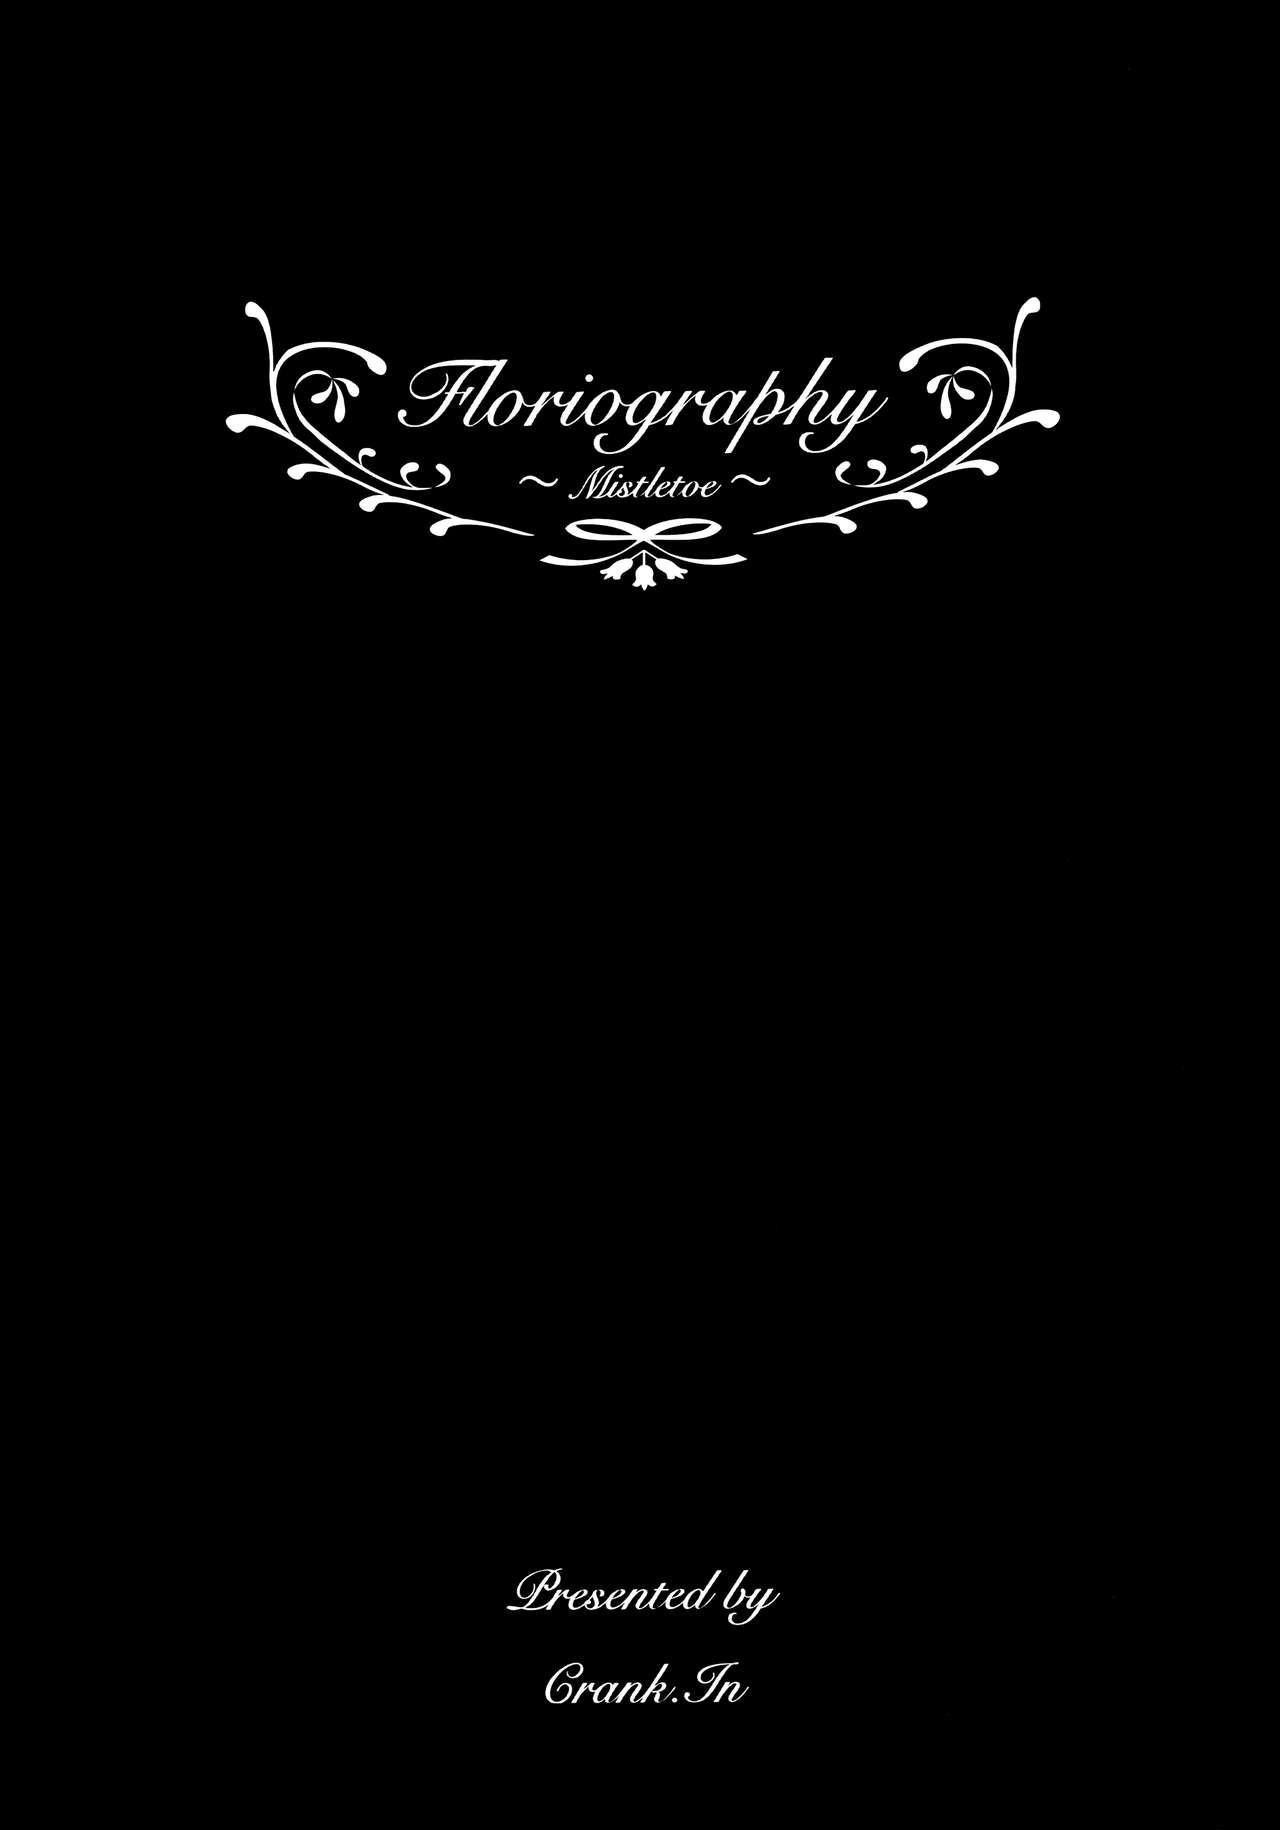 Indo Floriography - Original Harcore - Page 2